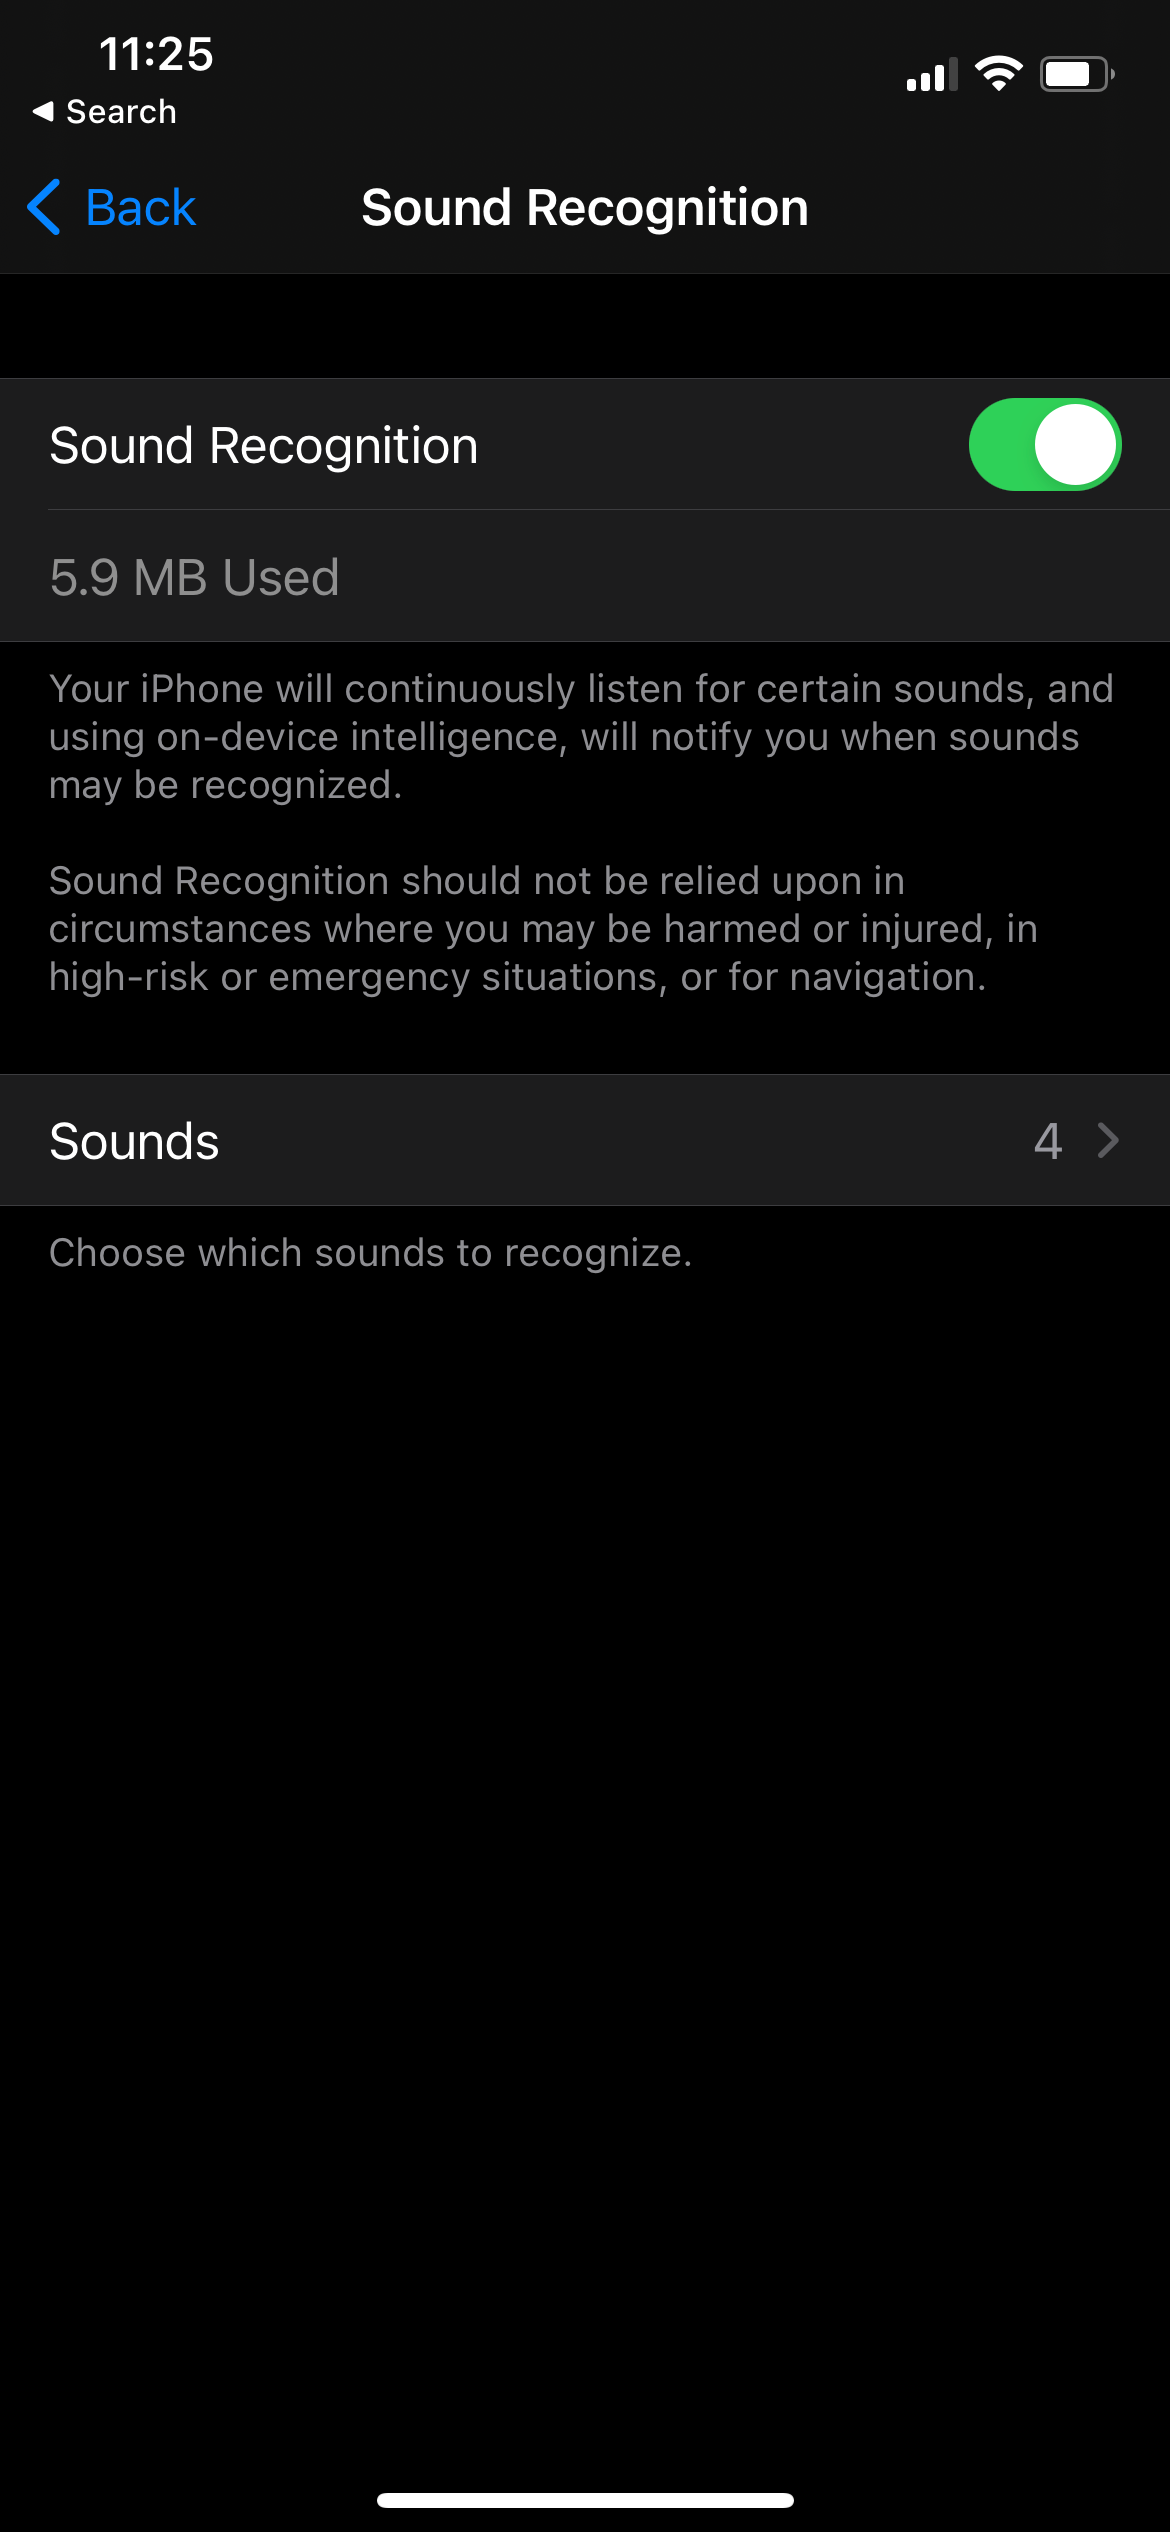 Sound Recognition Option